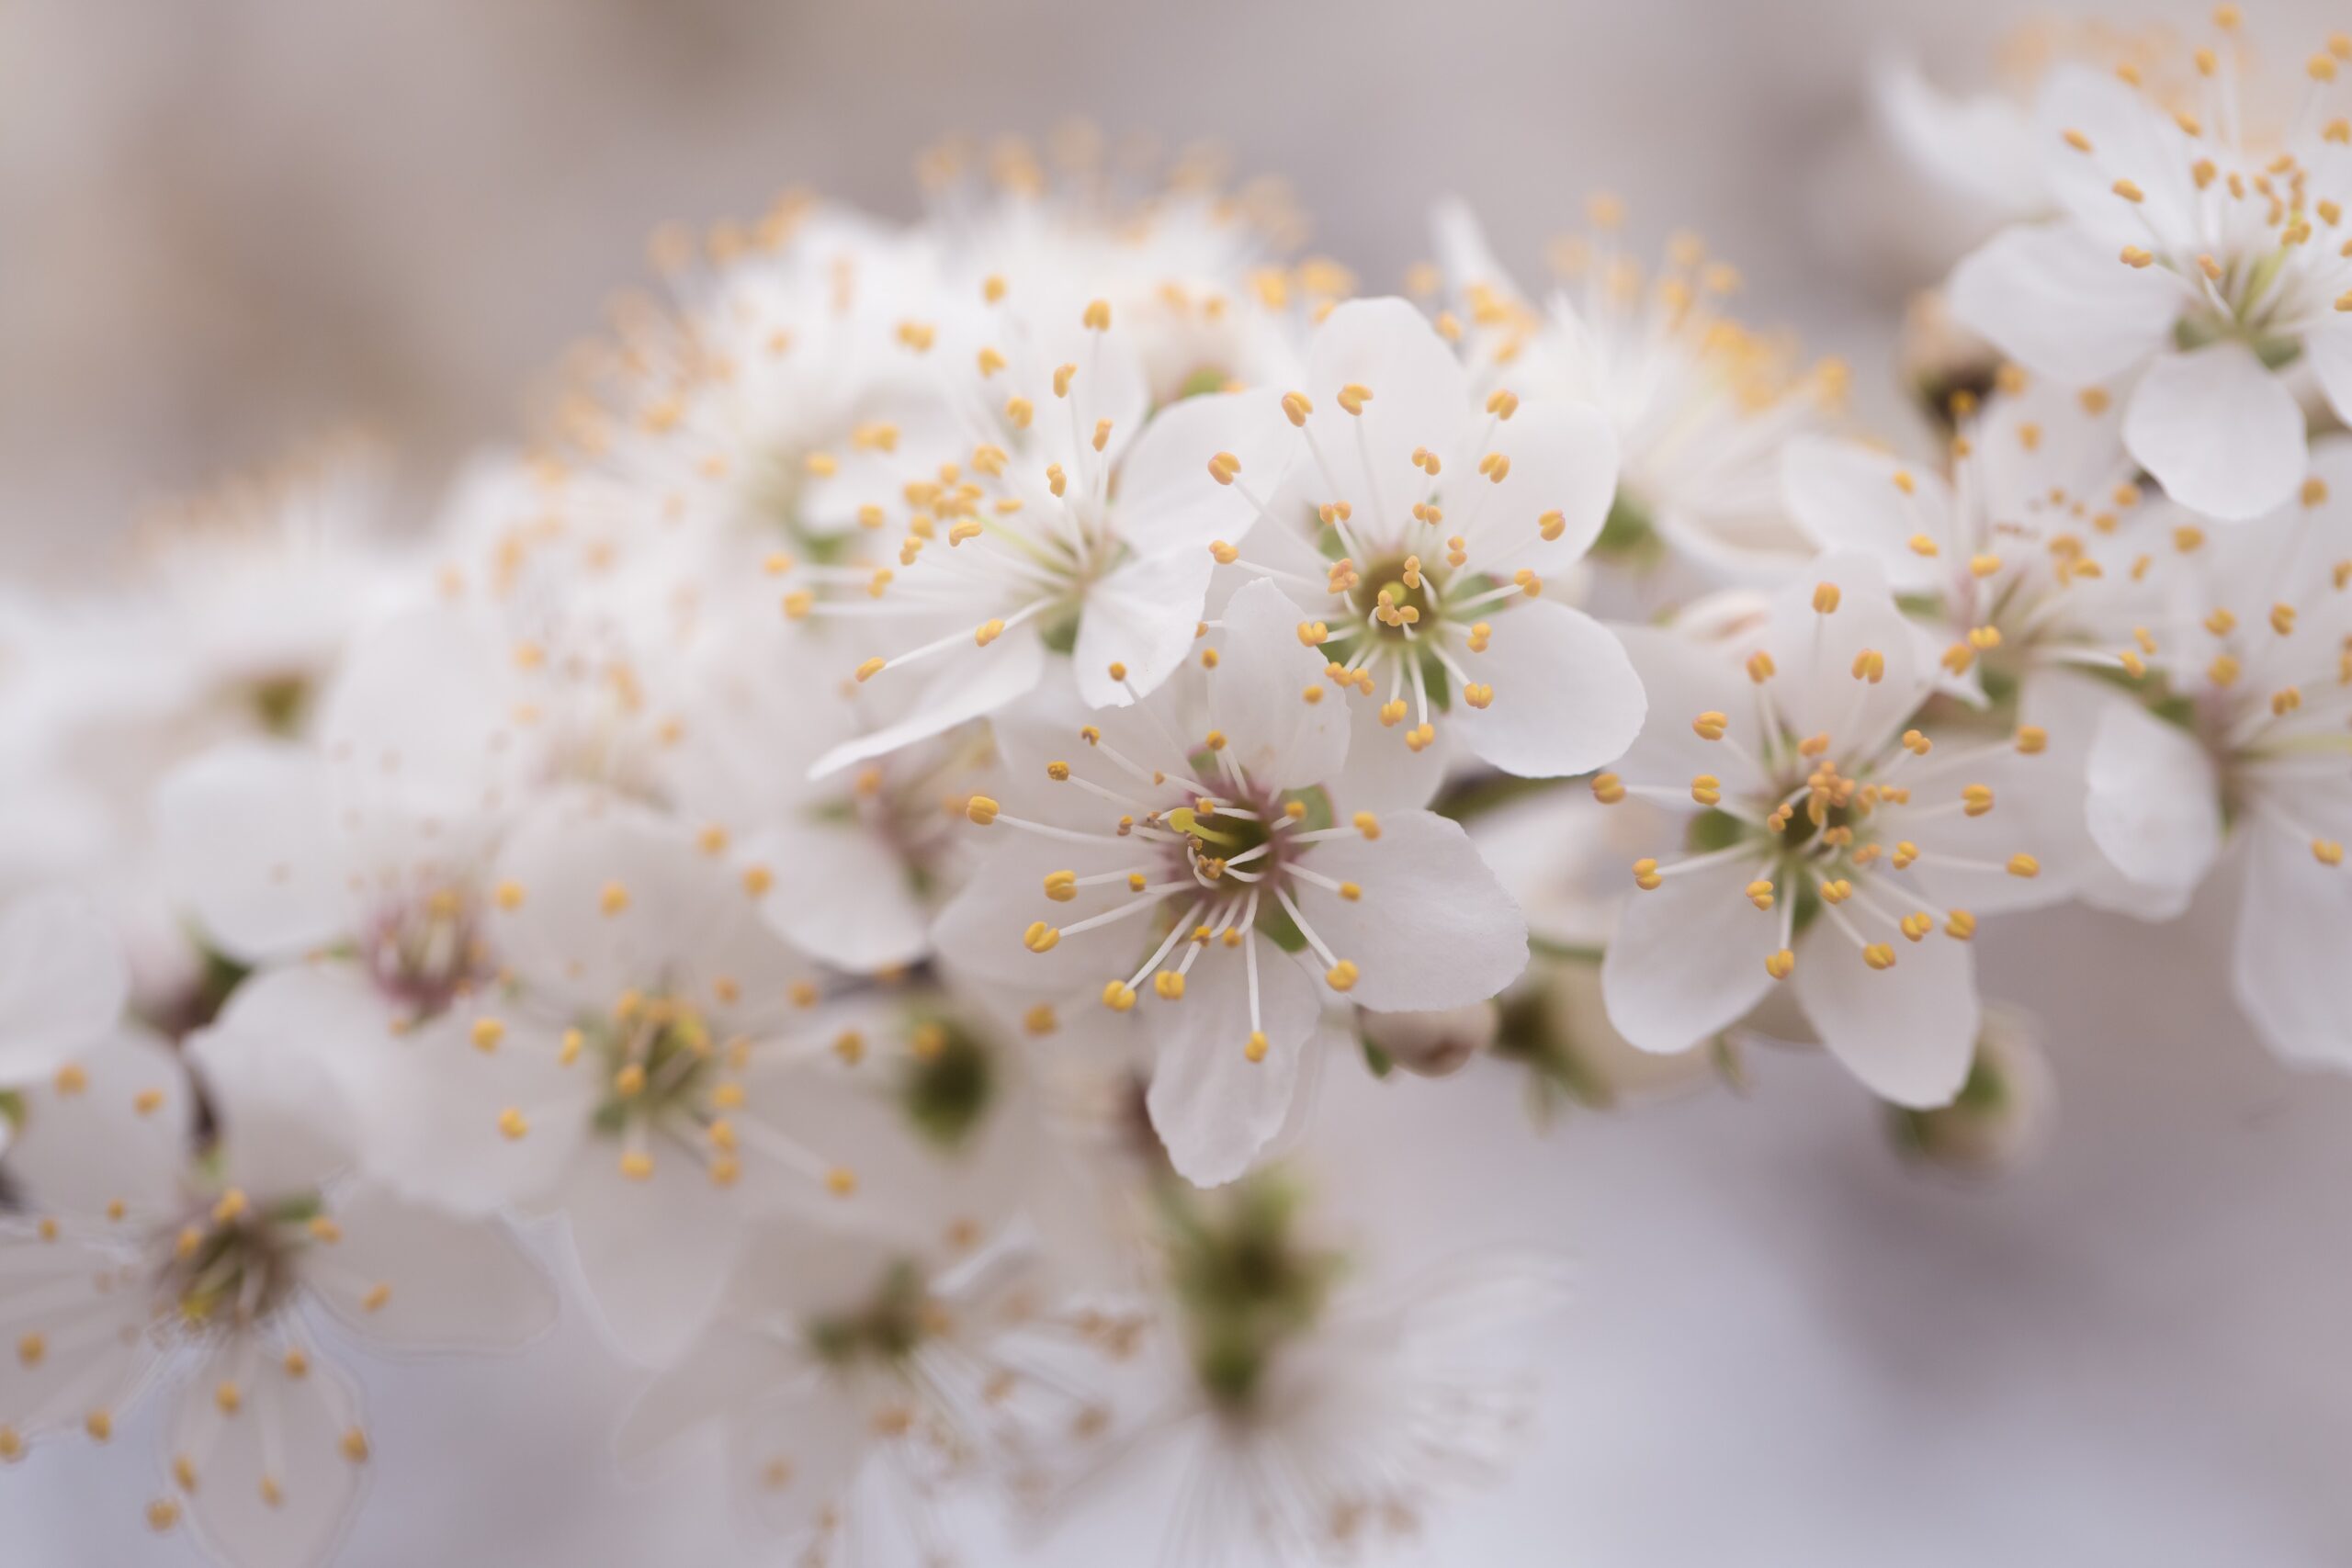 Photo by Anton Atanasov: https://www.pexels.com/photo/close-up-photo-of-white-petaled-flowers-364091/